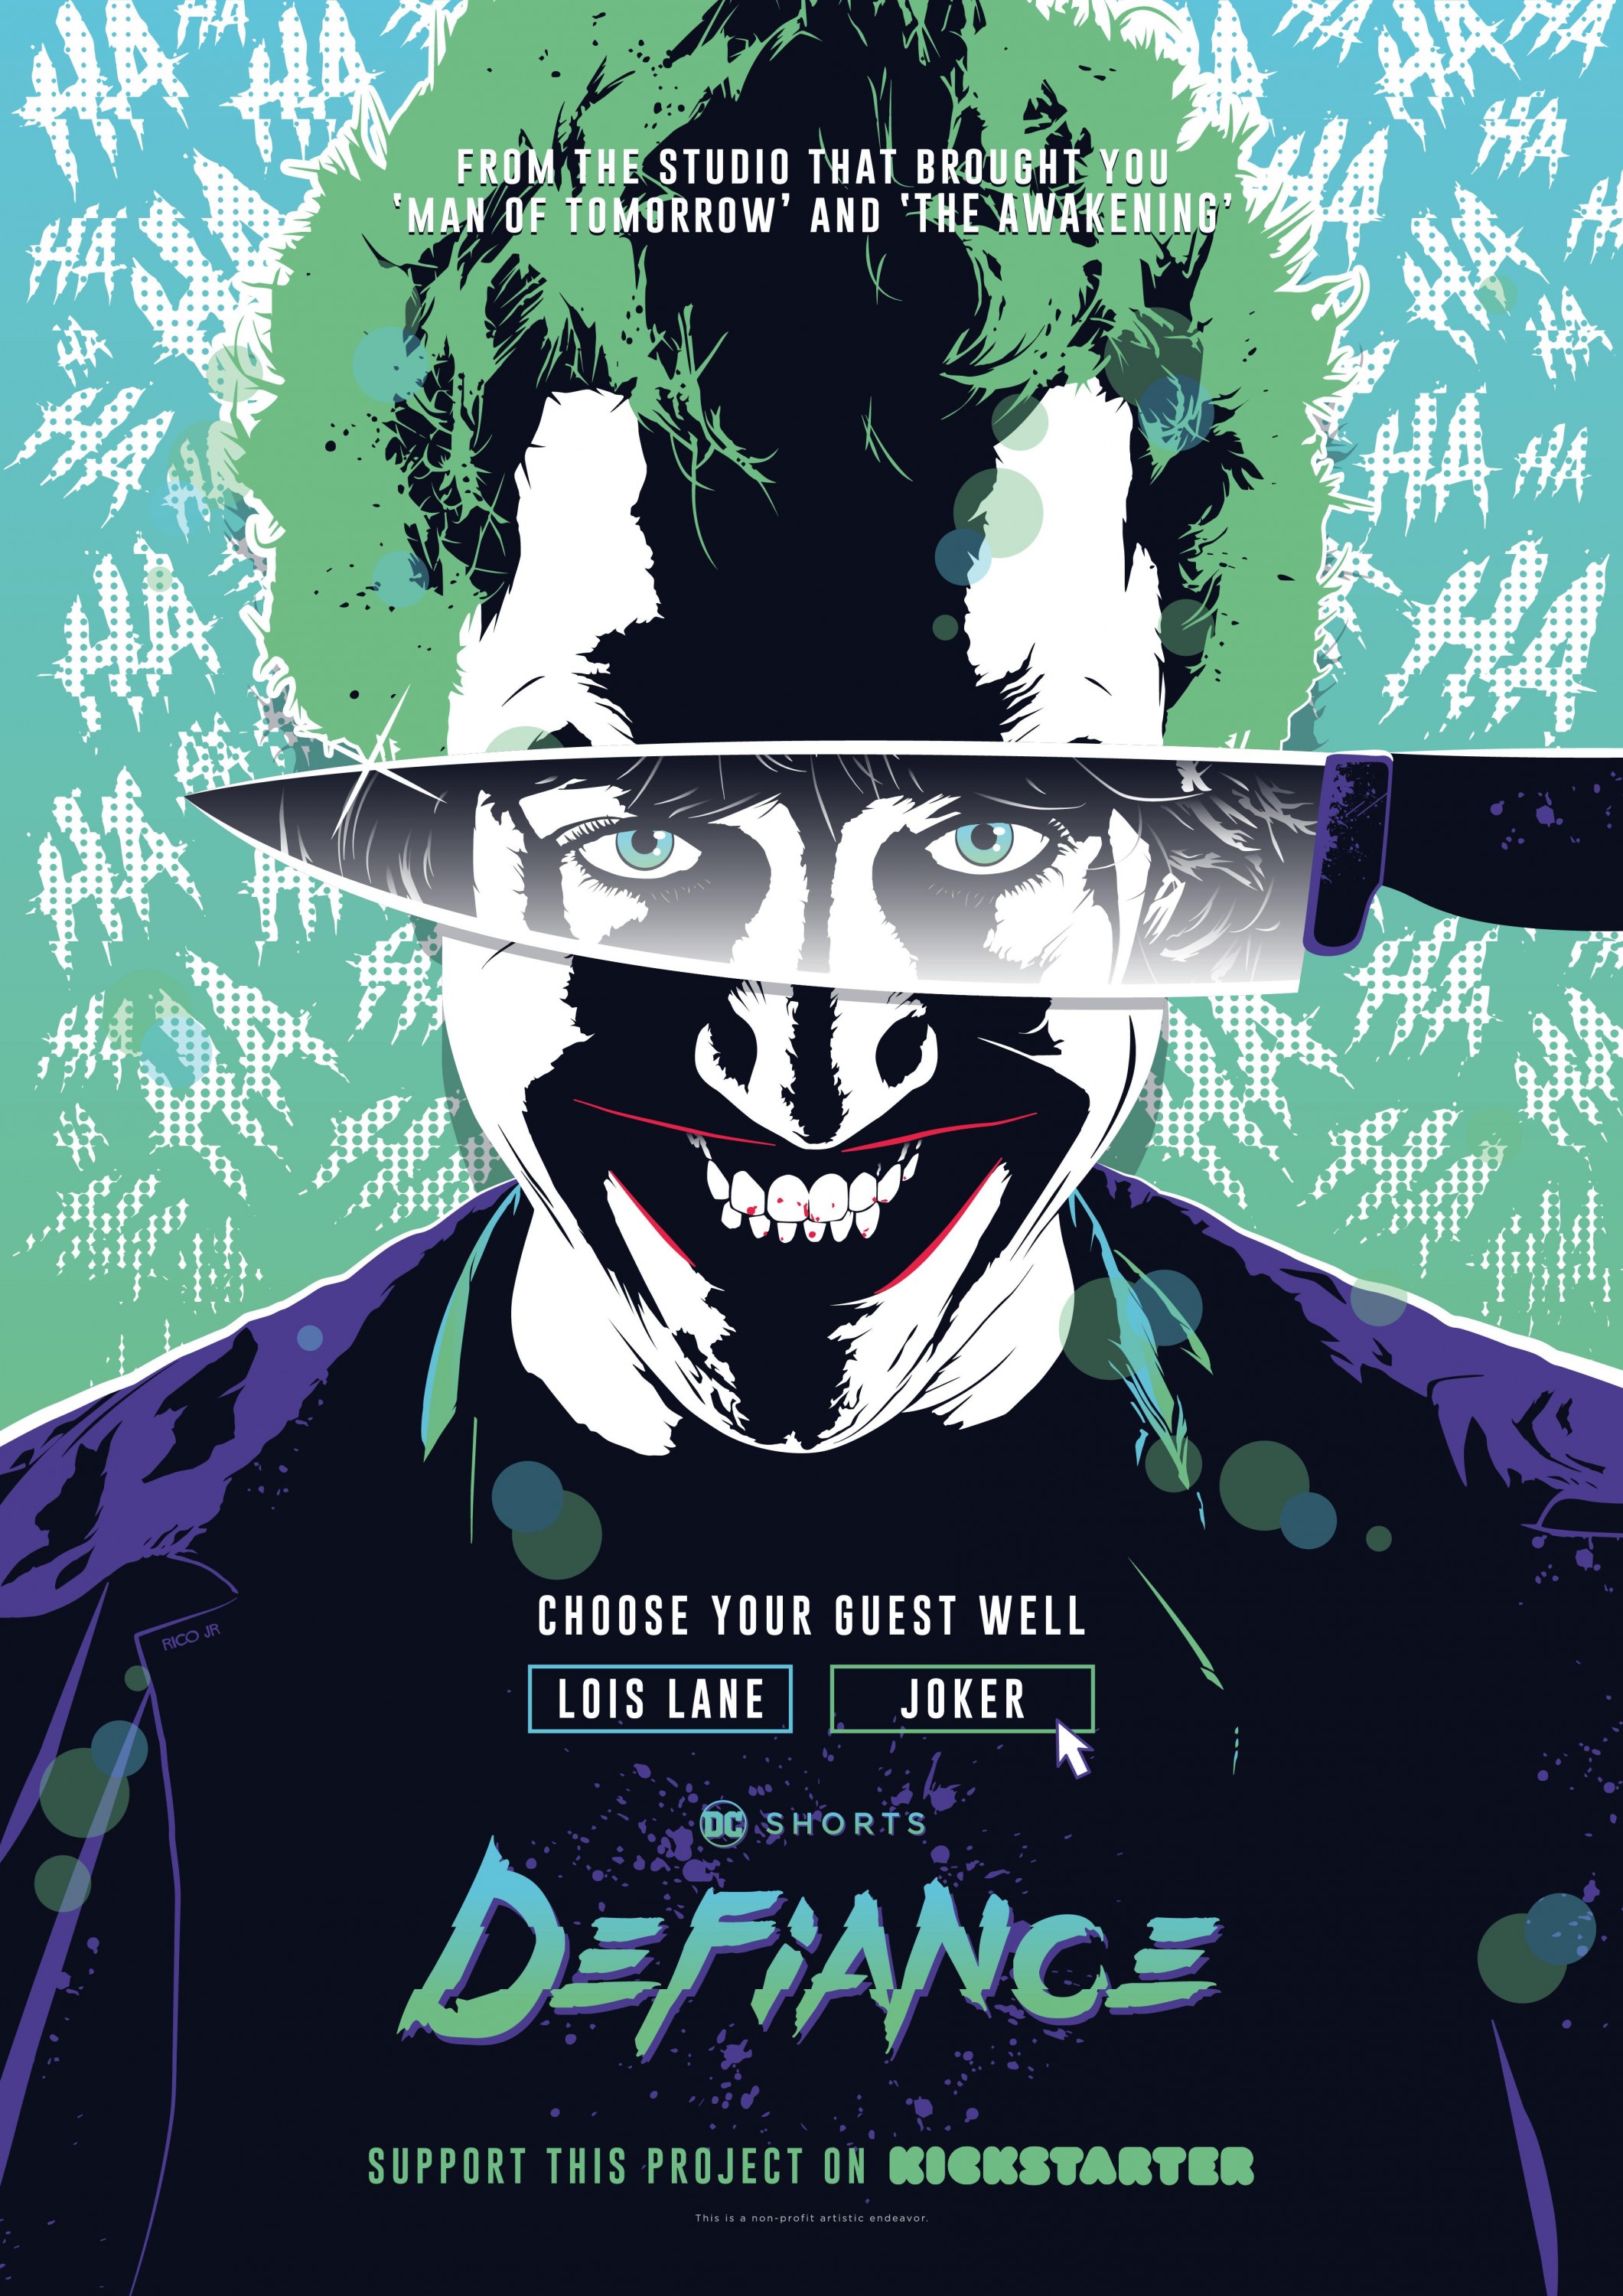 Mega Sized Movie Poster Image for Defiance